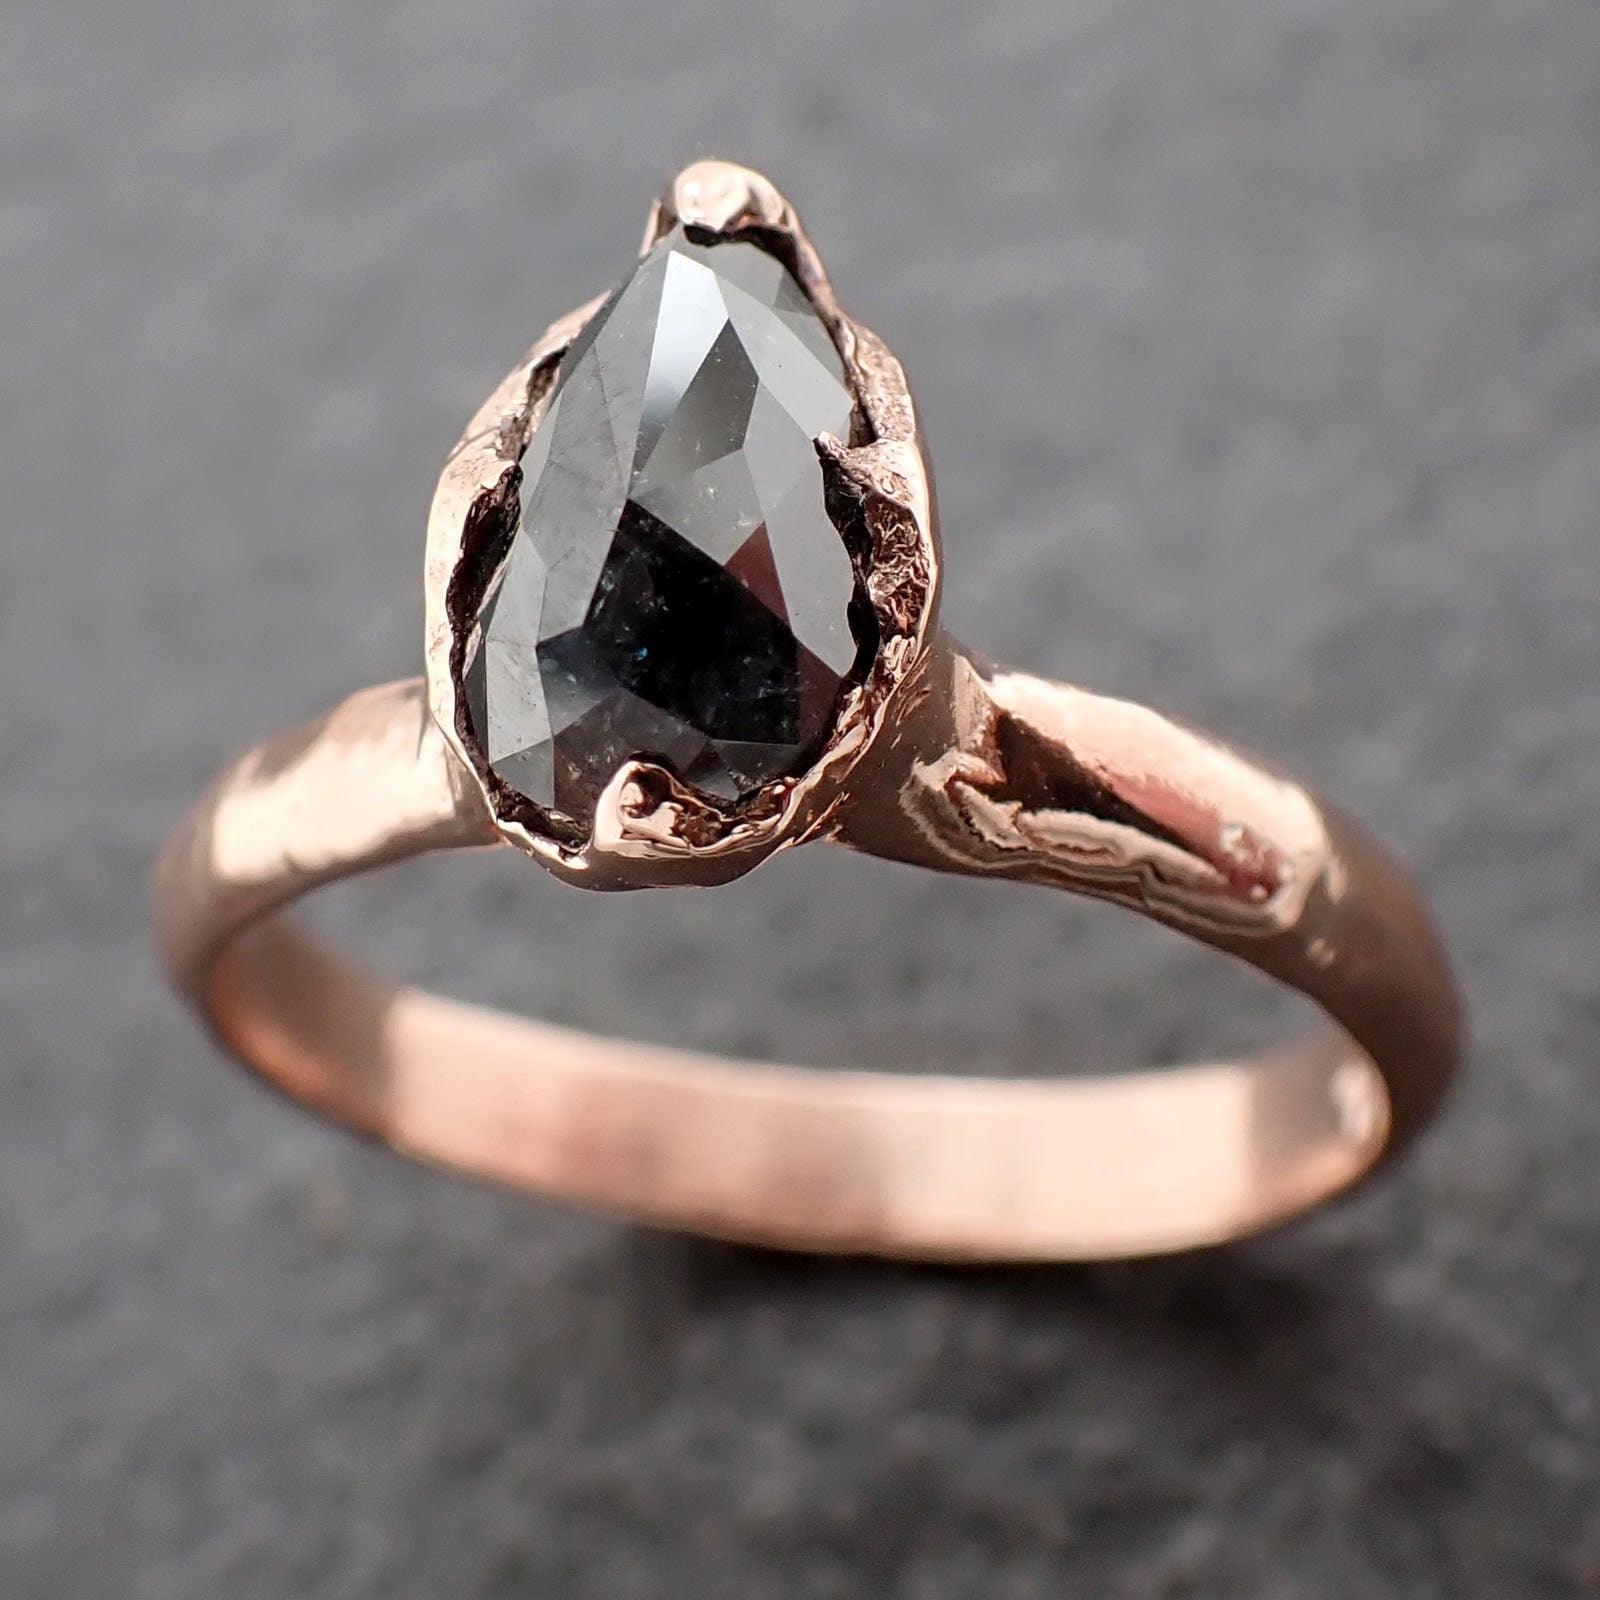 Fancy cut Salt and pepper Solitaire Diamond Engagement 14k Rose Gold Wedding Ring byAngeline 3186